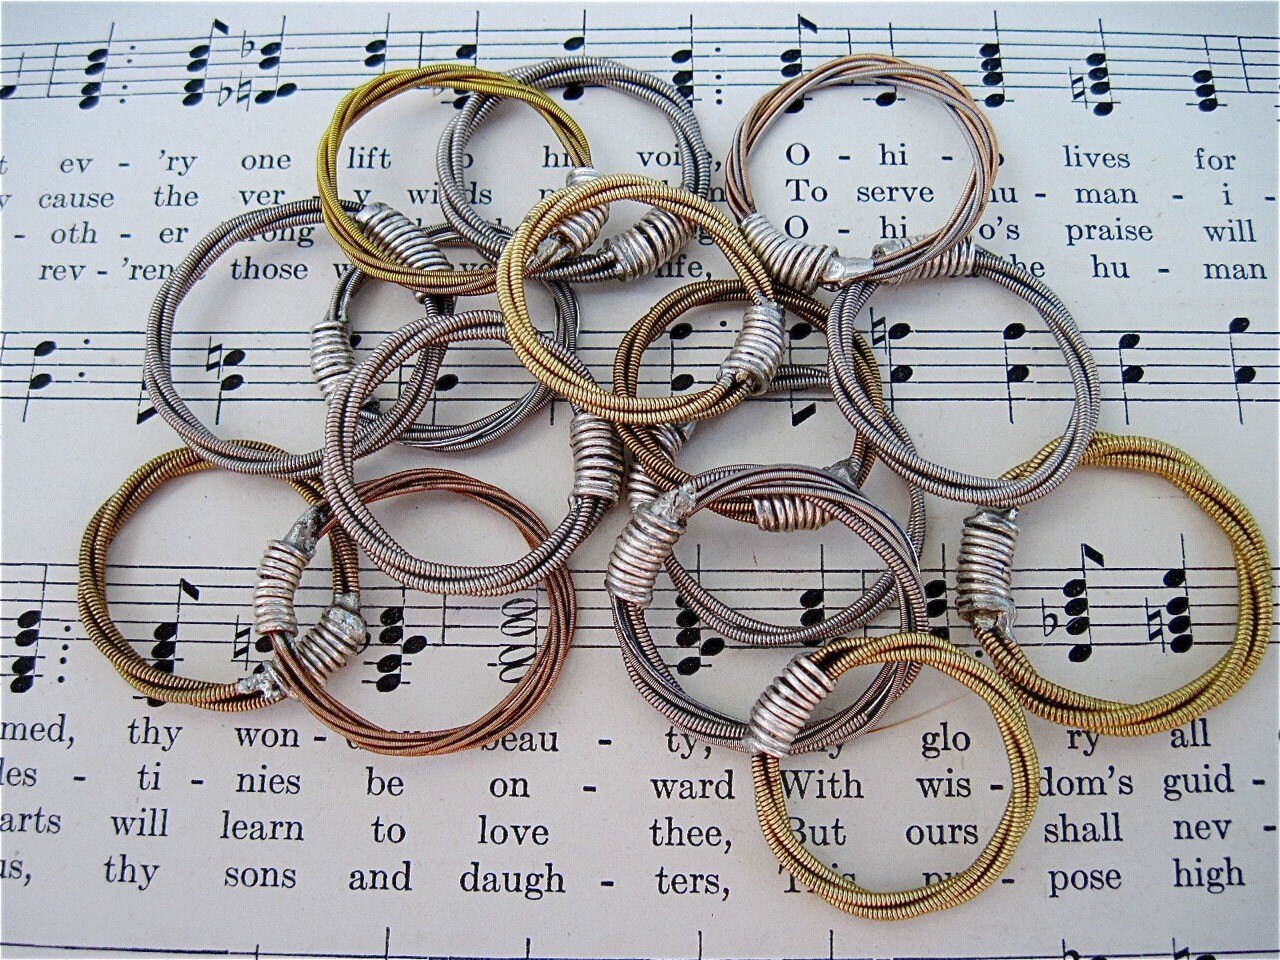 Wedding ring on a string